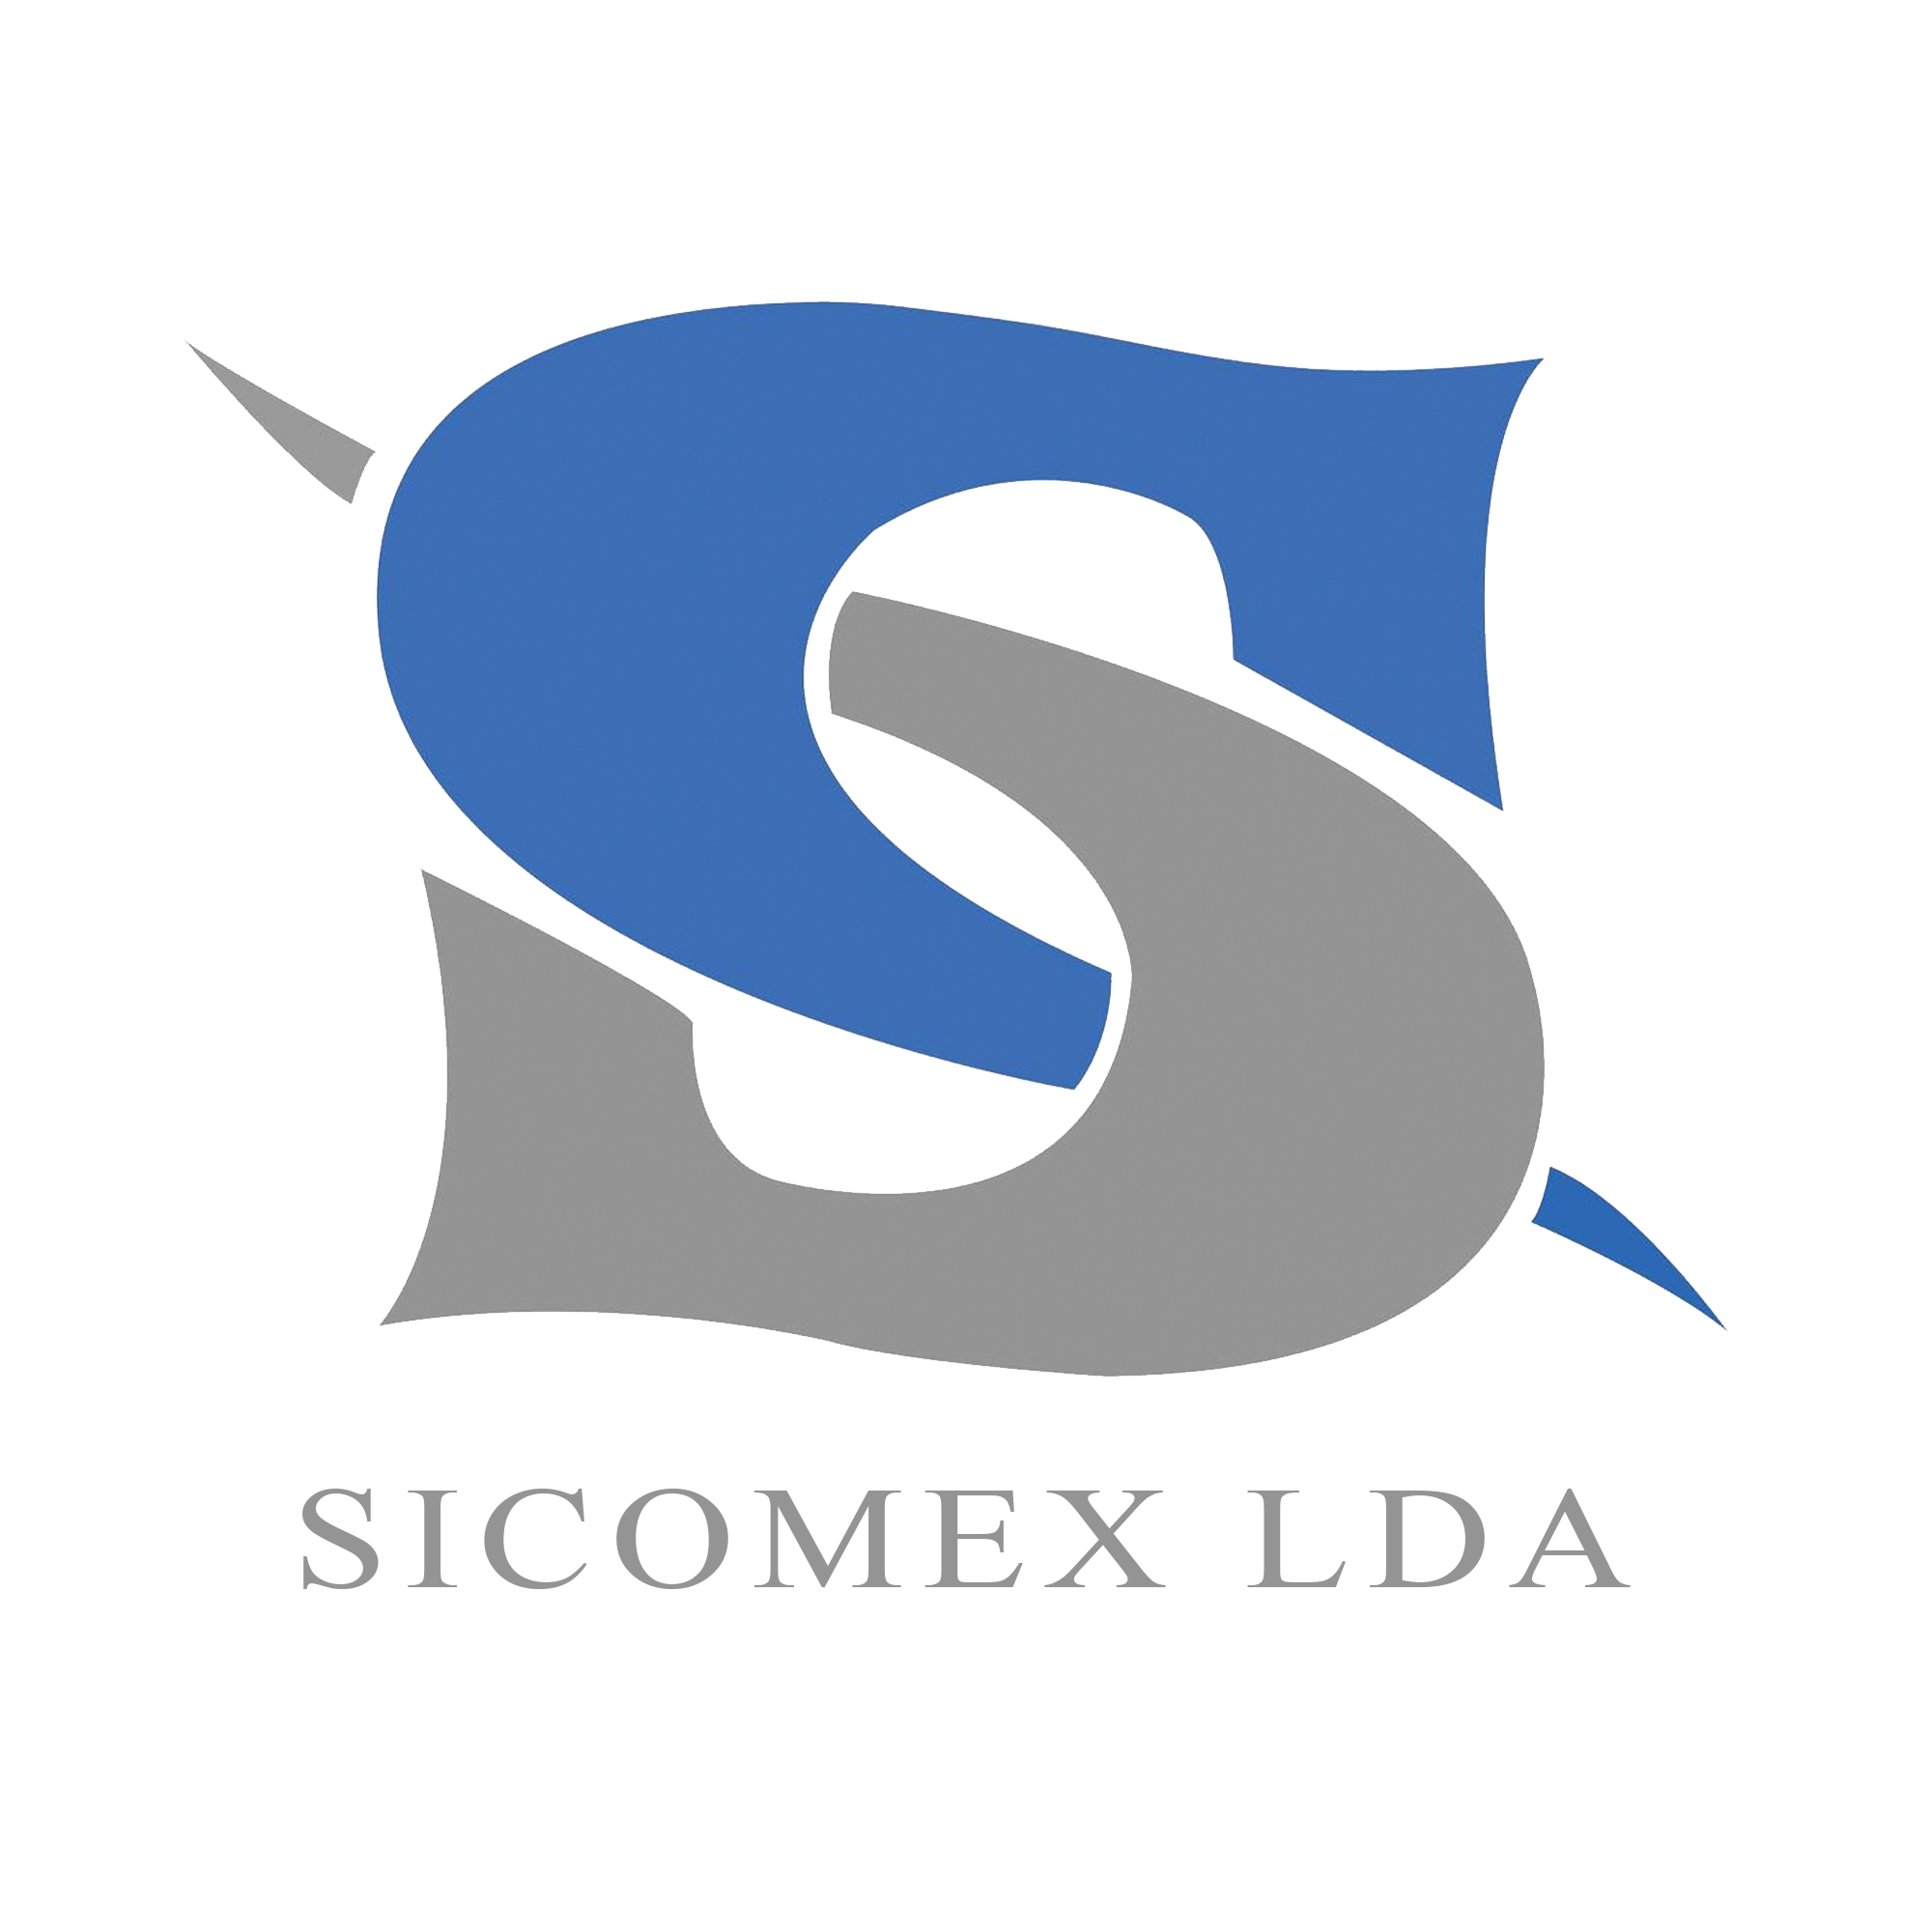 Sicomex LDA